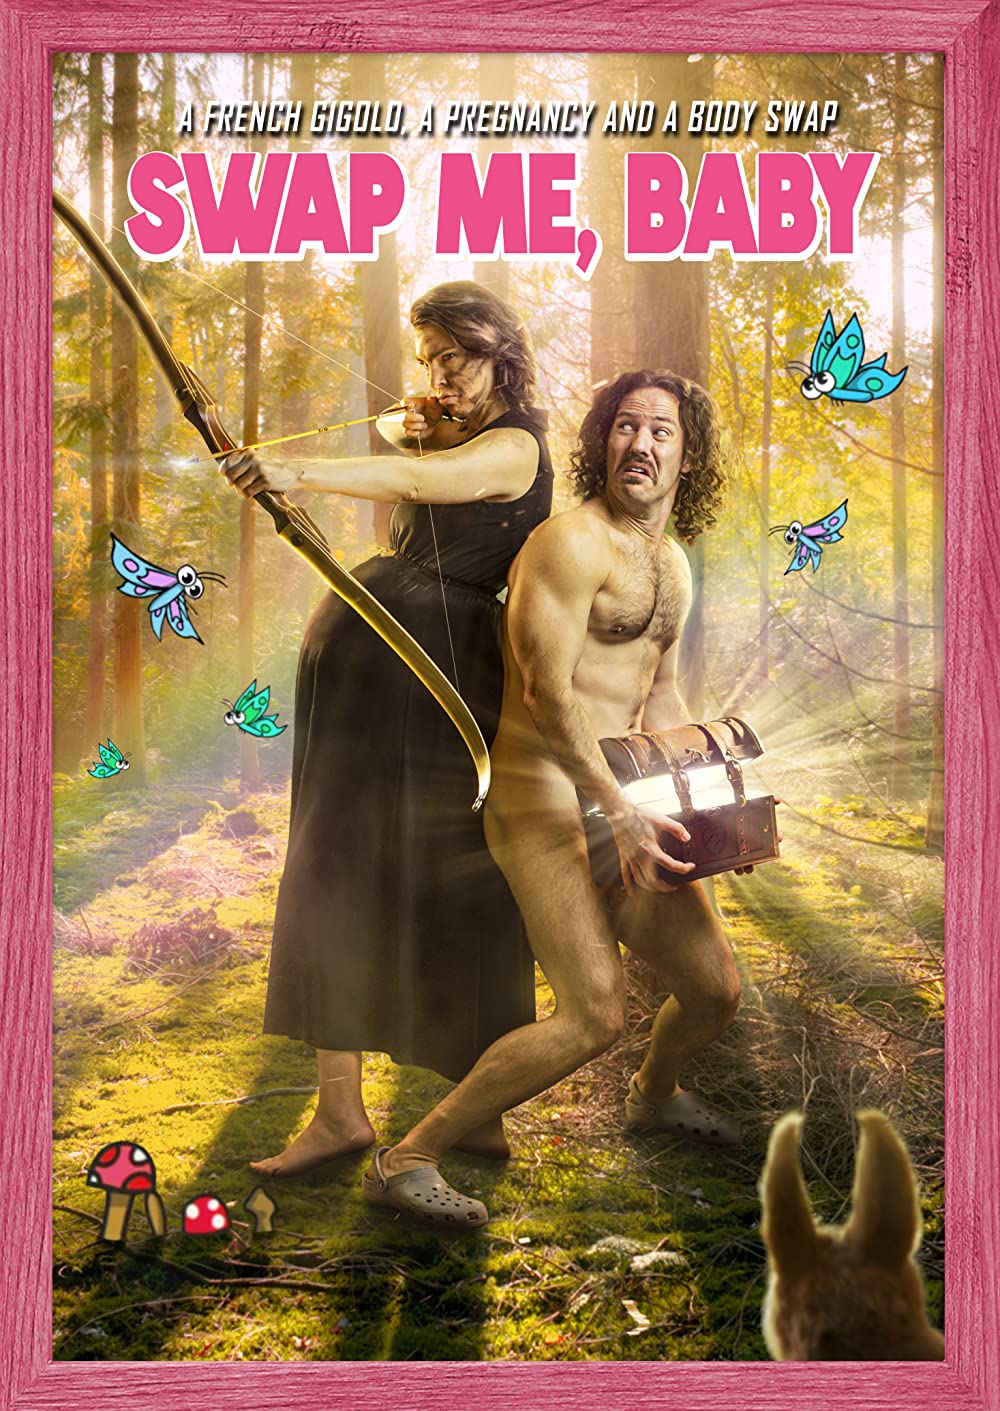 "Swap Me Baby" movie starring Falk Hetnschel and Ava Boel